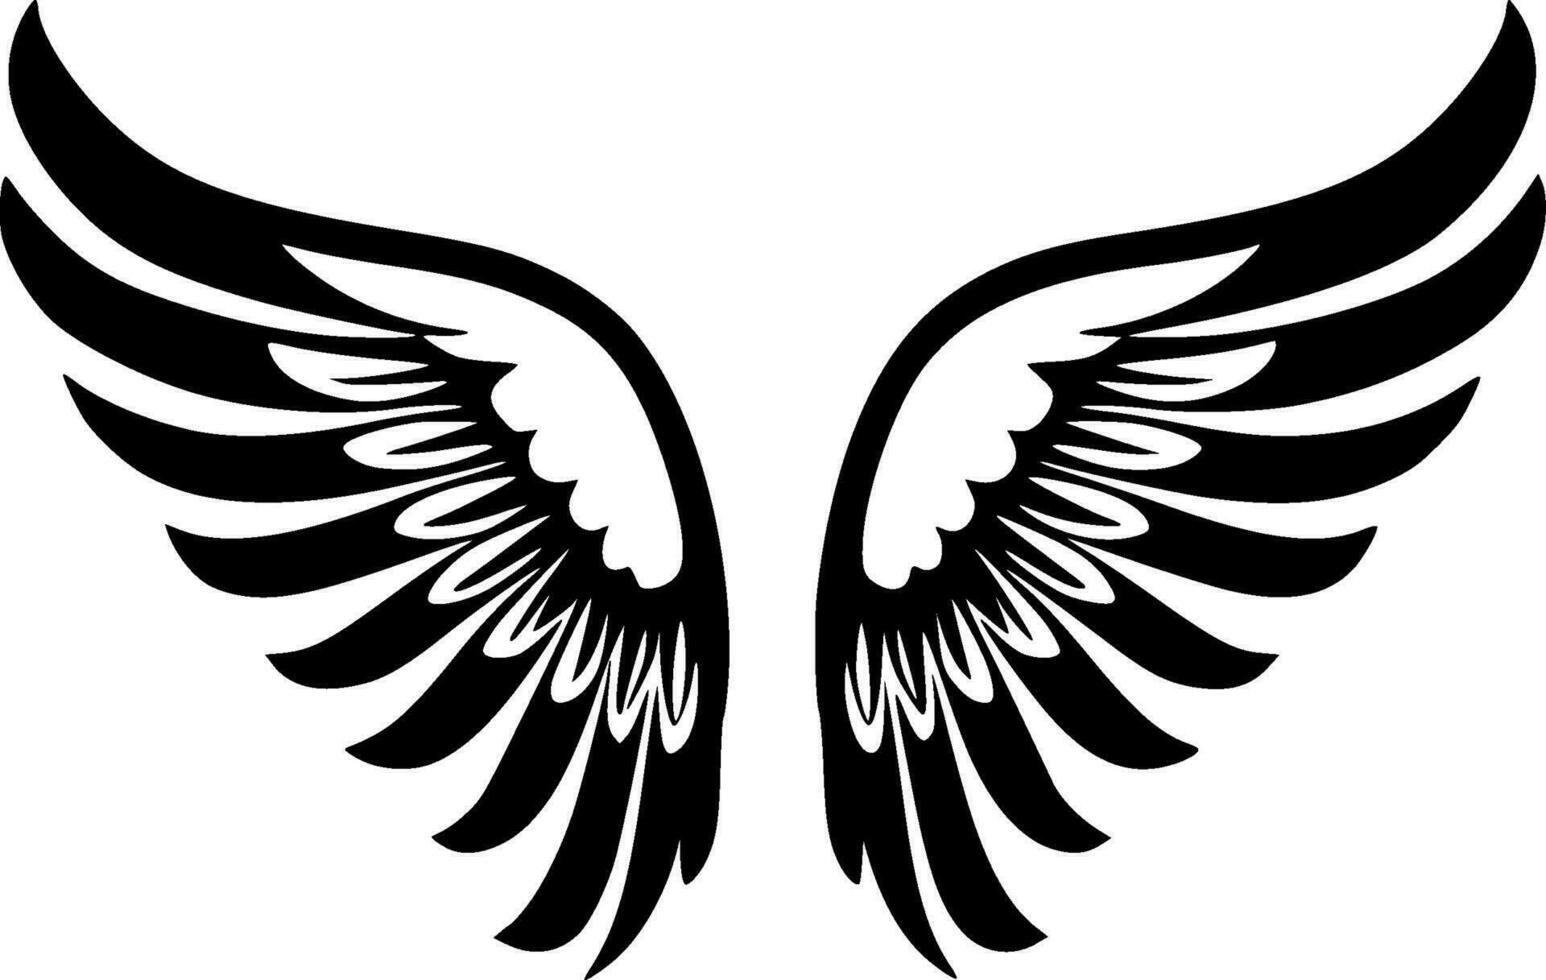 Angel Wings, Minimalist and Simple Silhouette - Vector illustration